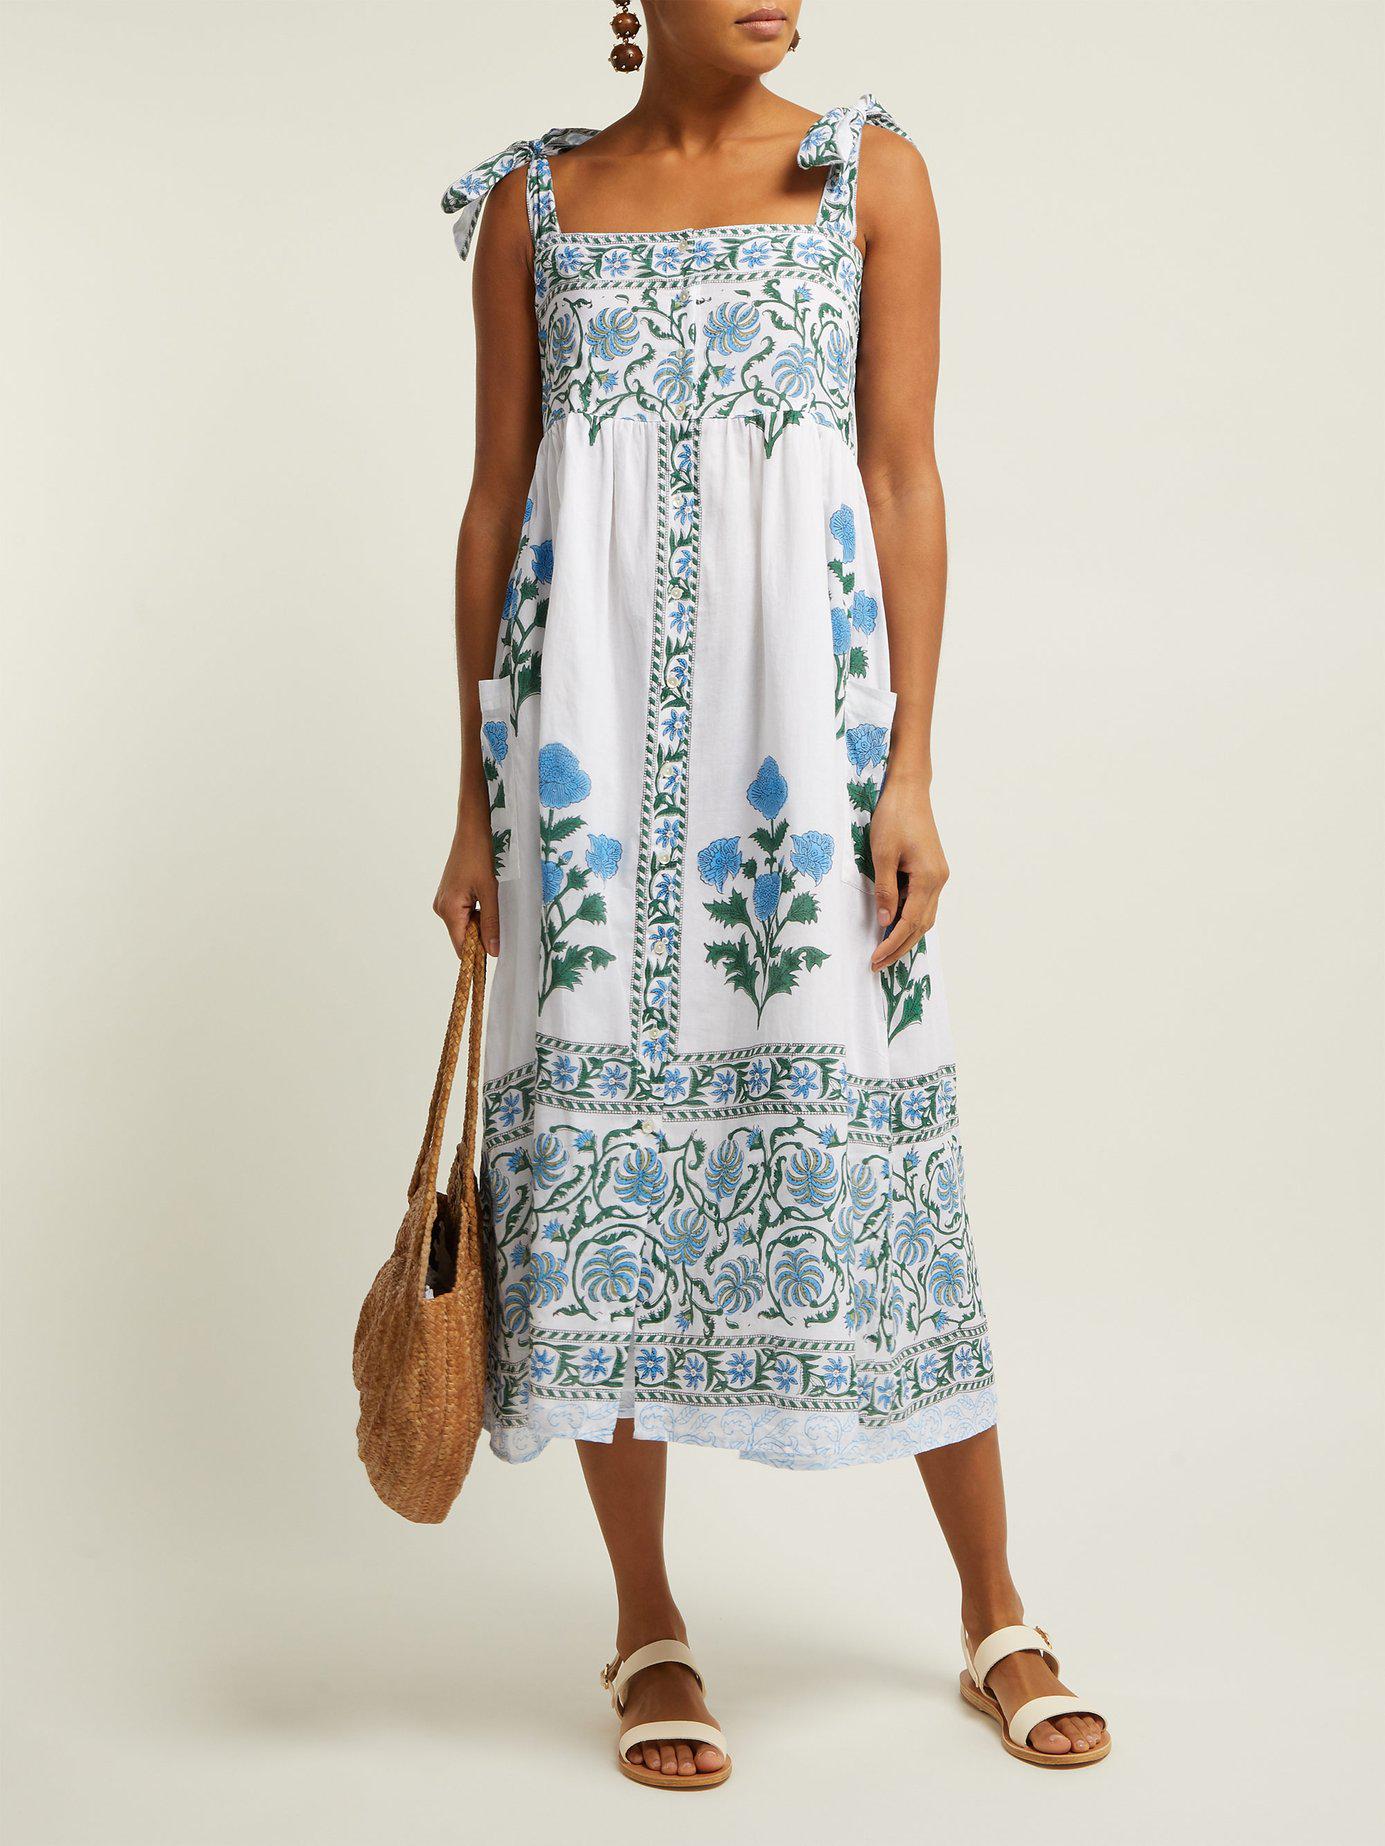 Juliet Dunn Poppy Print Cotton Midi Dress in Floral (Blue) - Lyst